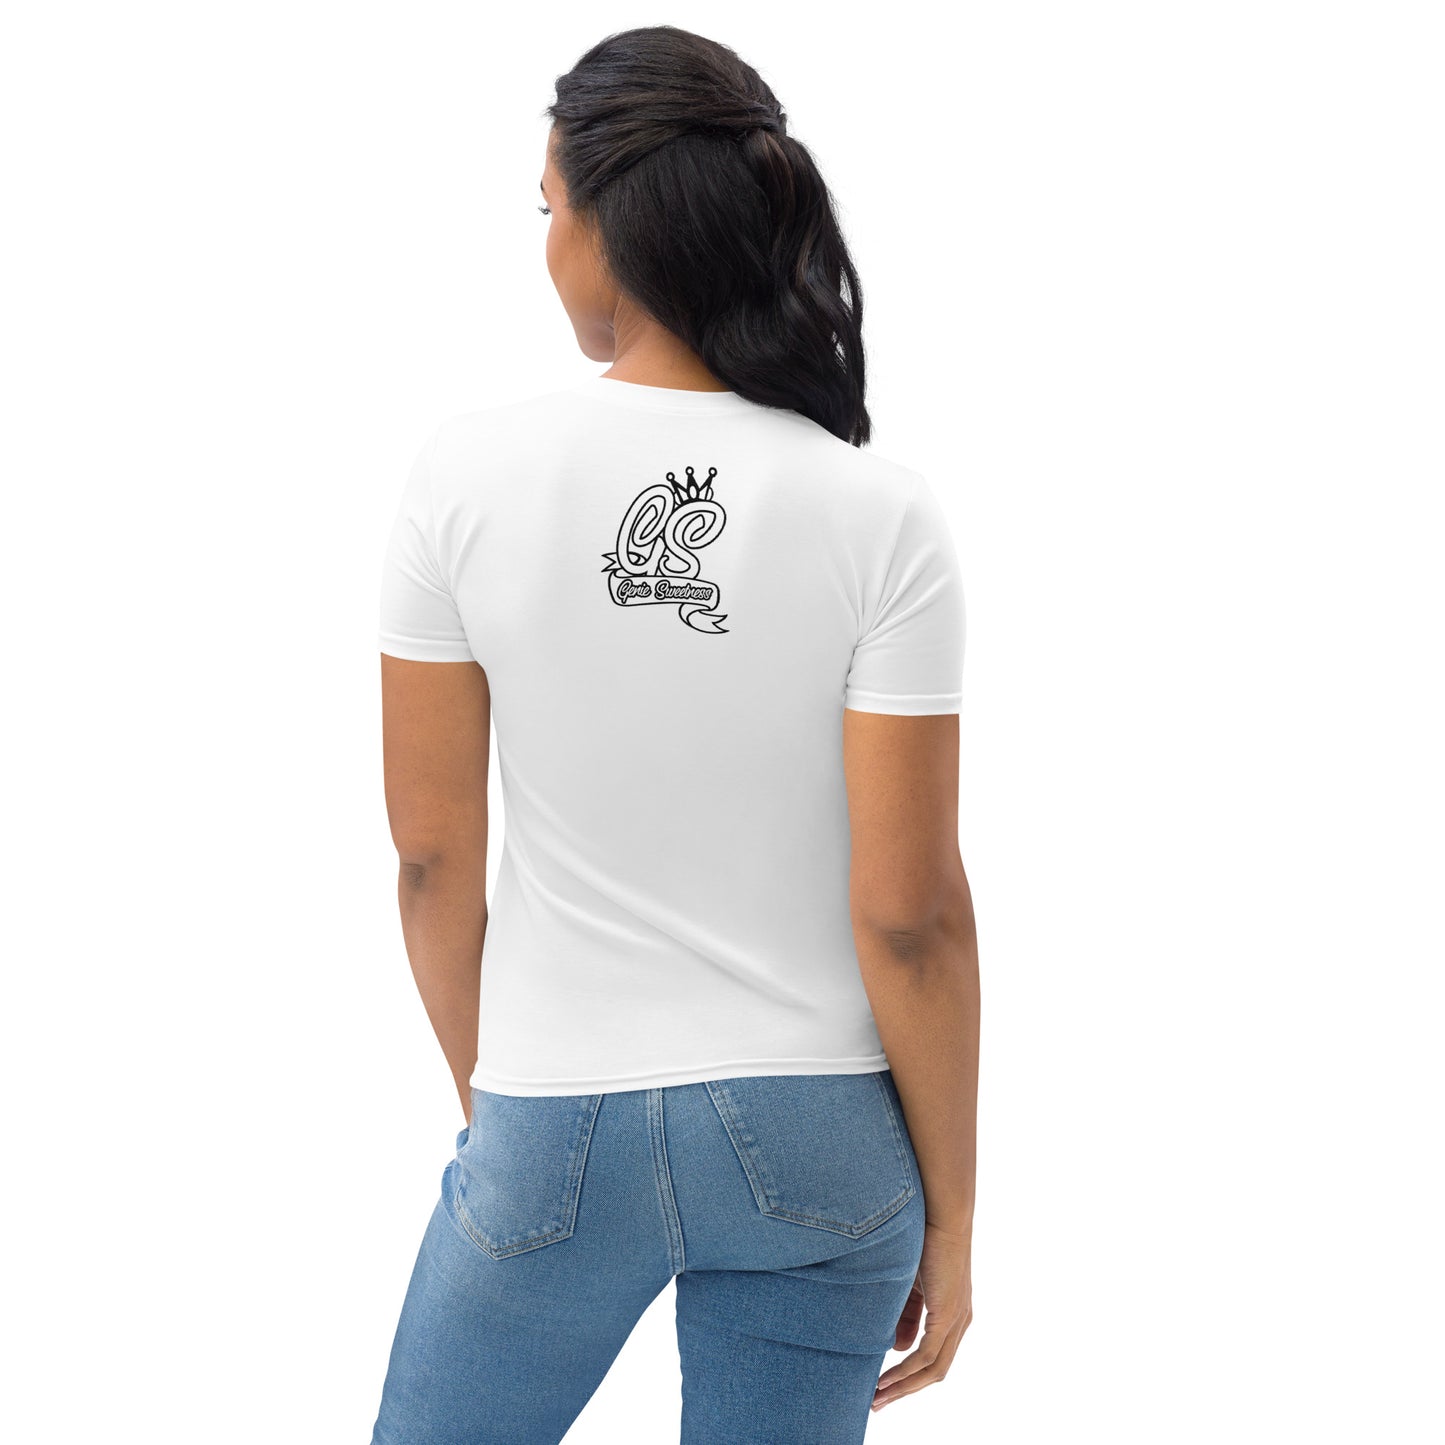 I LOVE ME NUFF (Women's T-shirt)